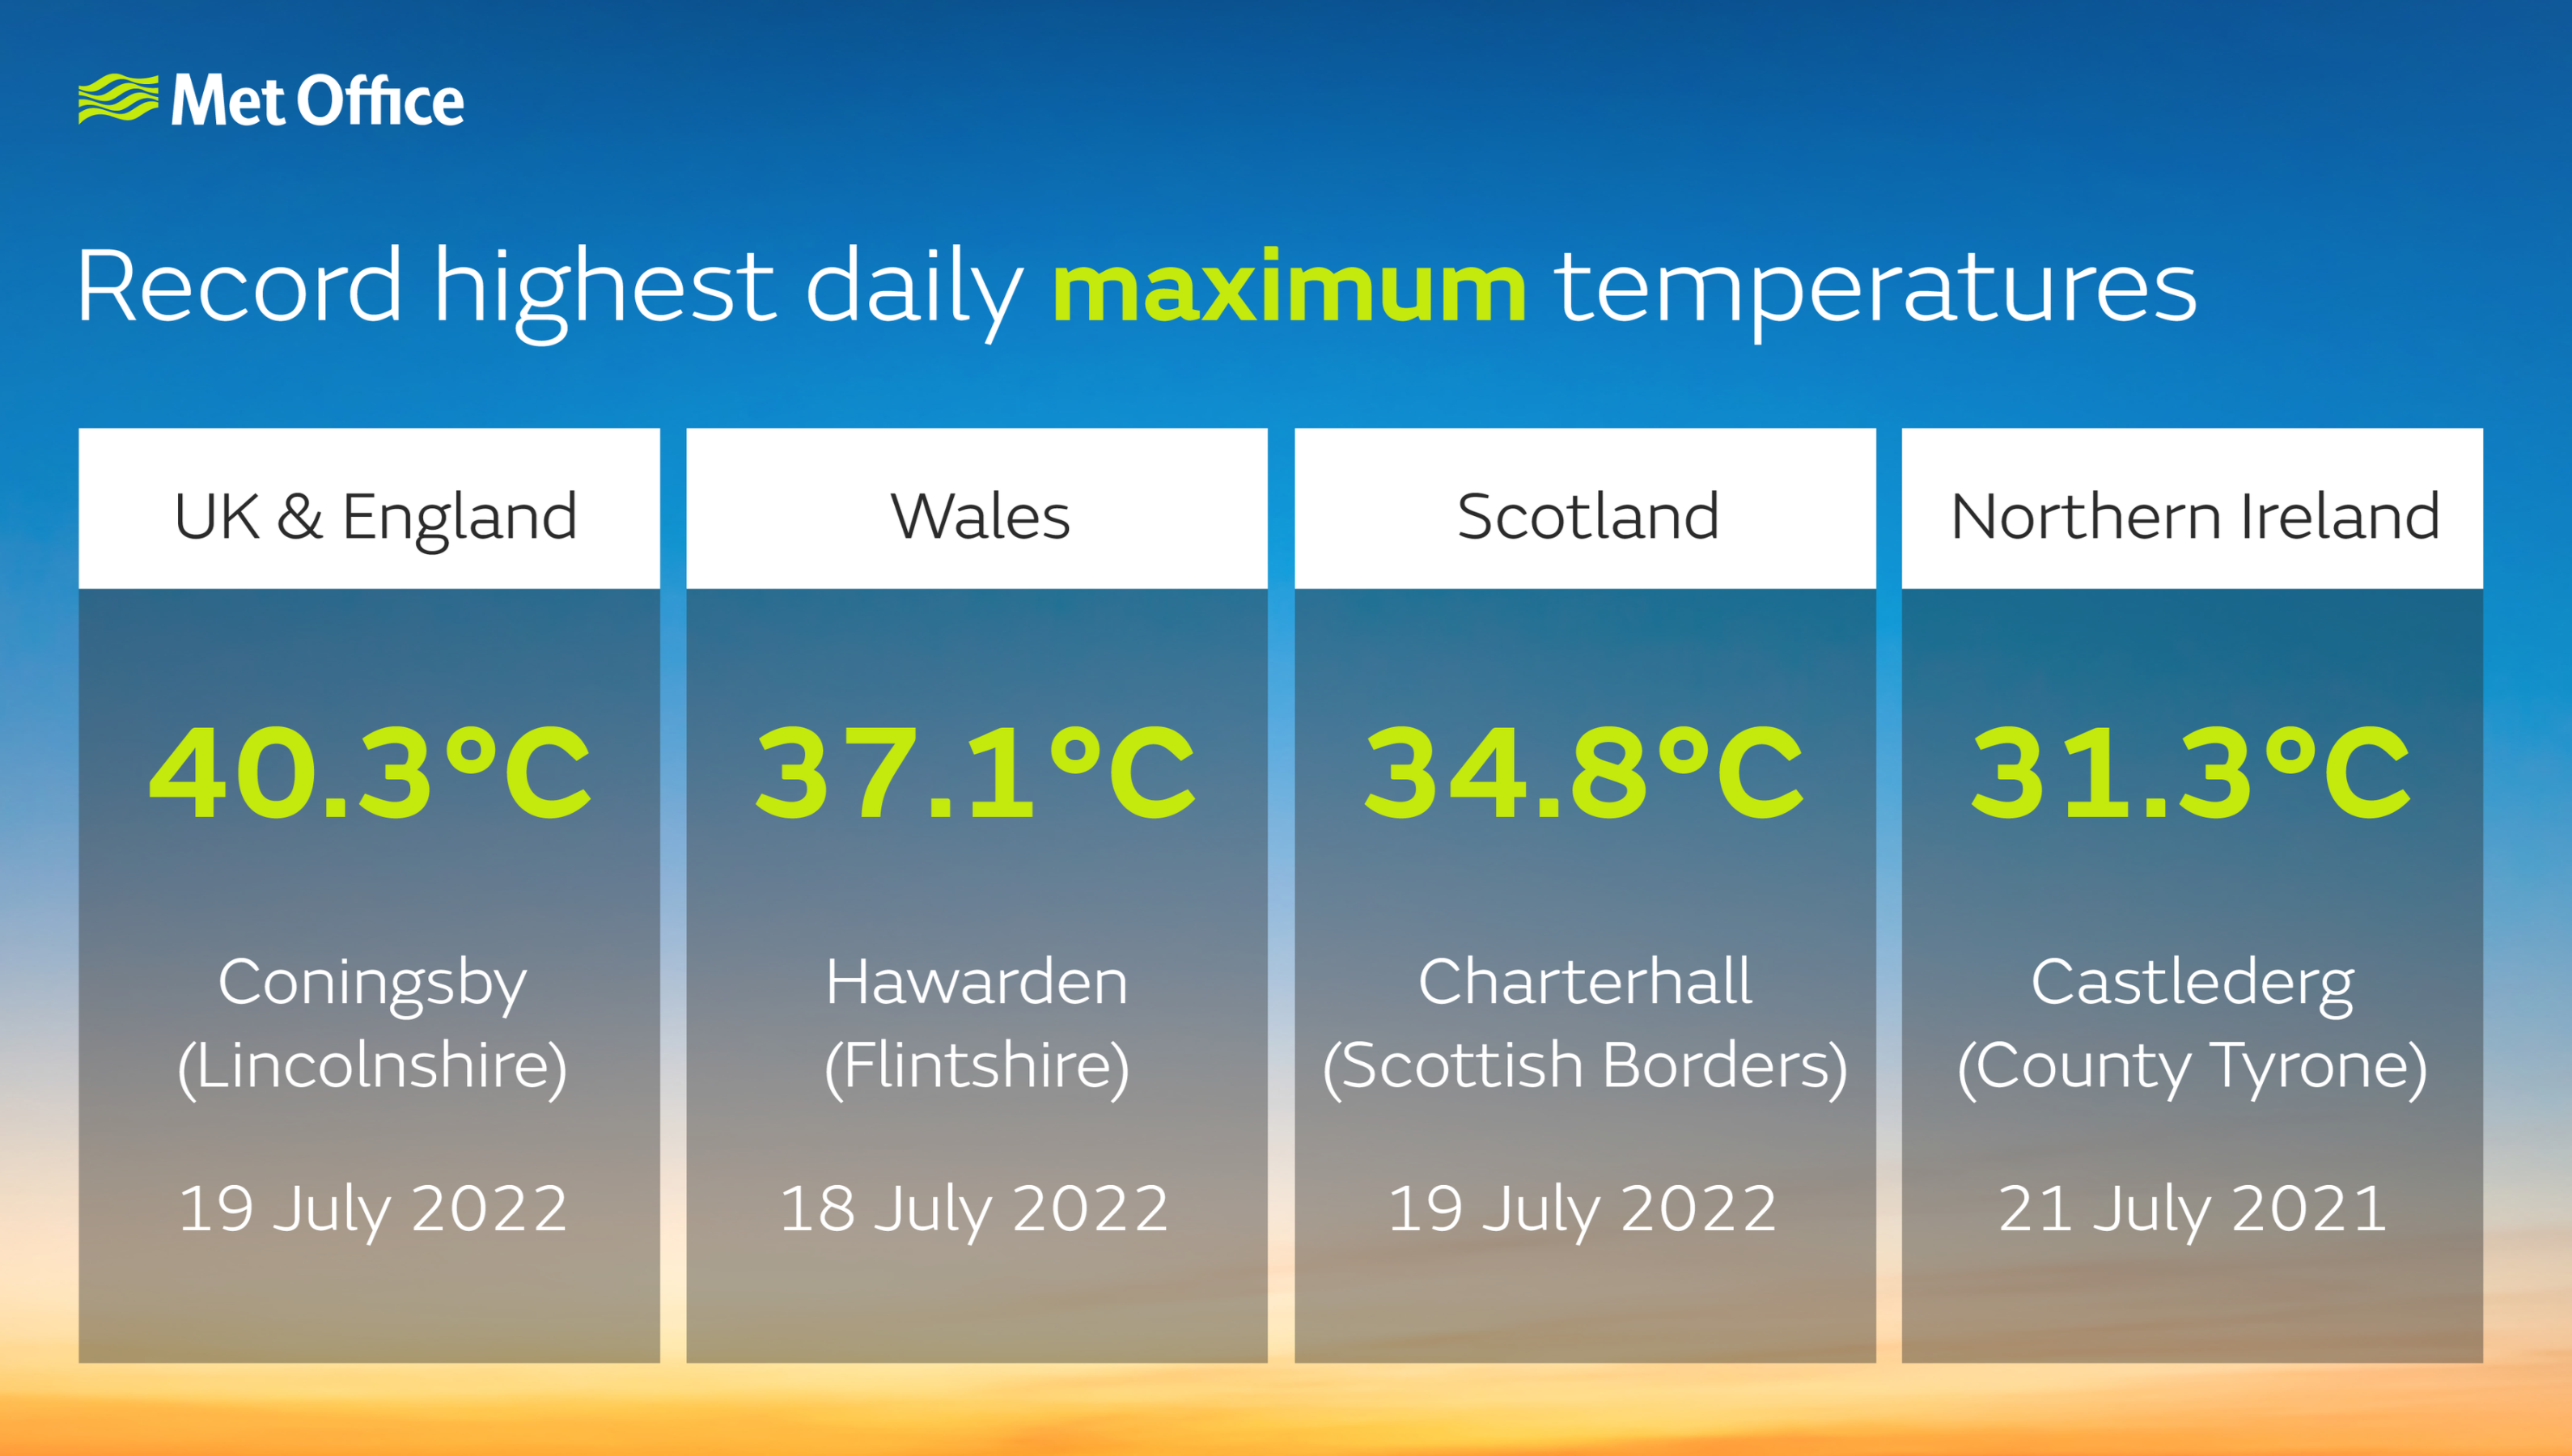 Record highest daily maximum temperatures. UK and England: 40.3C. Wales: 37.1C. Scotland: 34.8C. Northern Ireland: 31.3C.